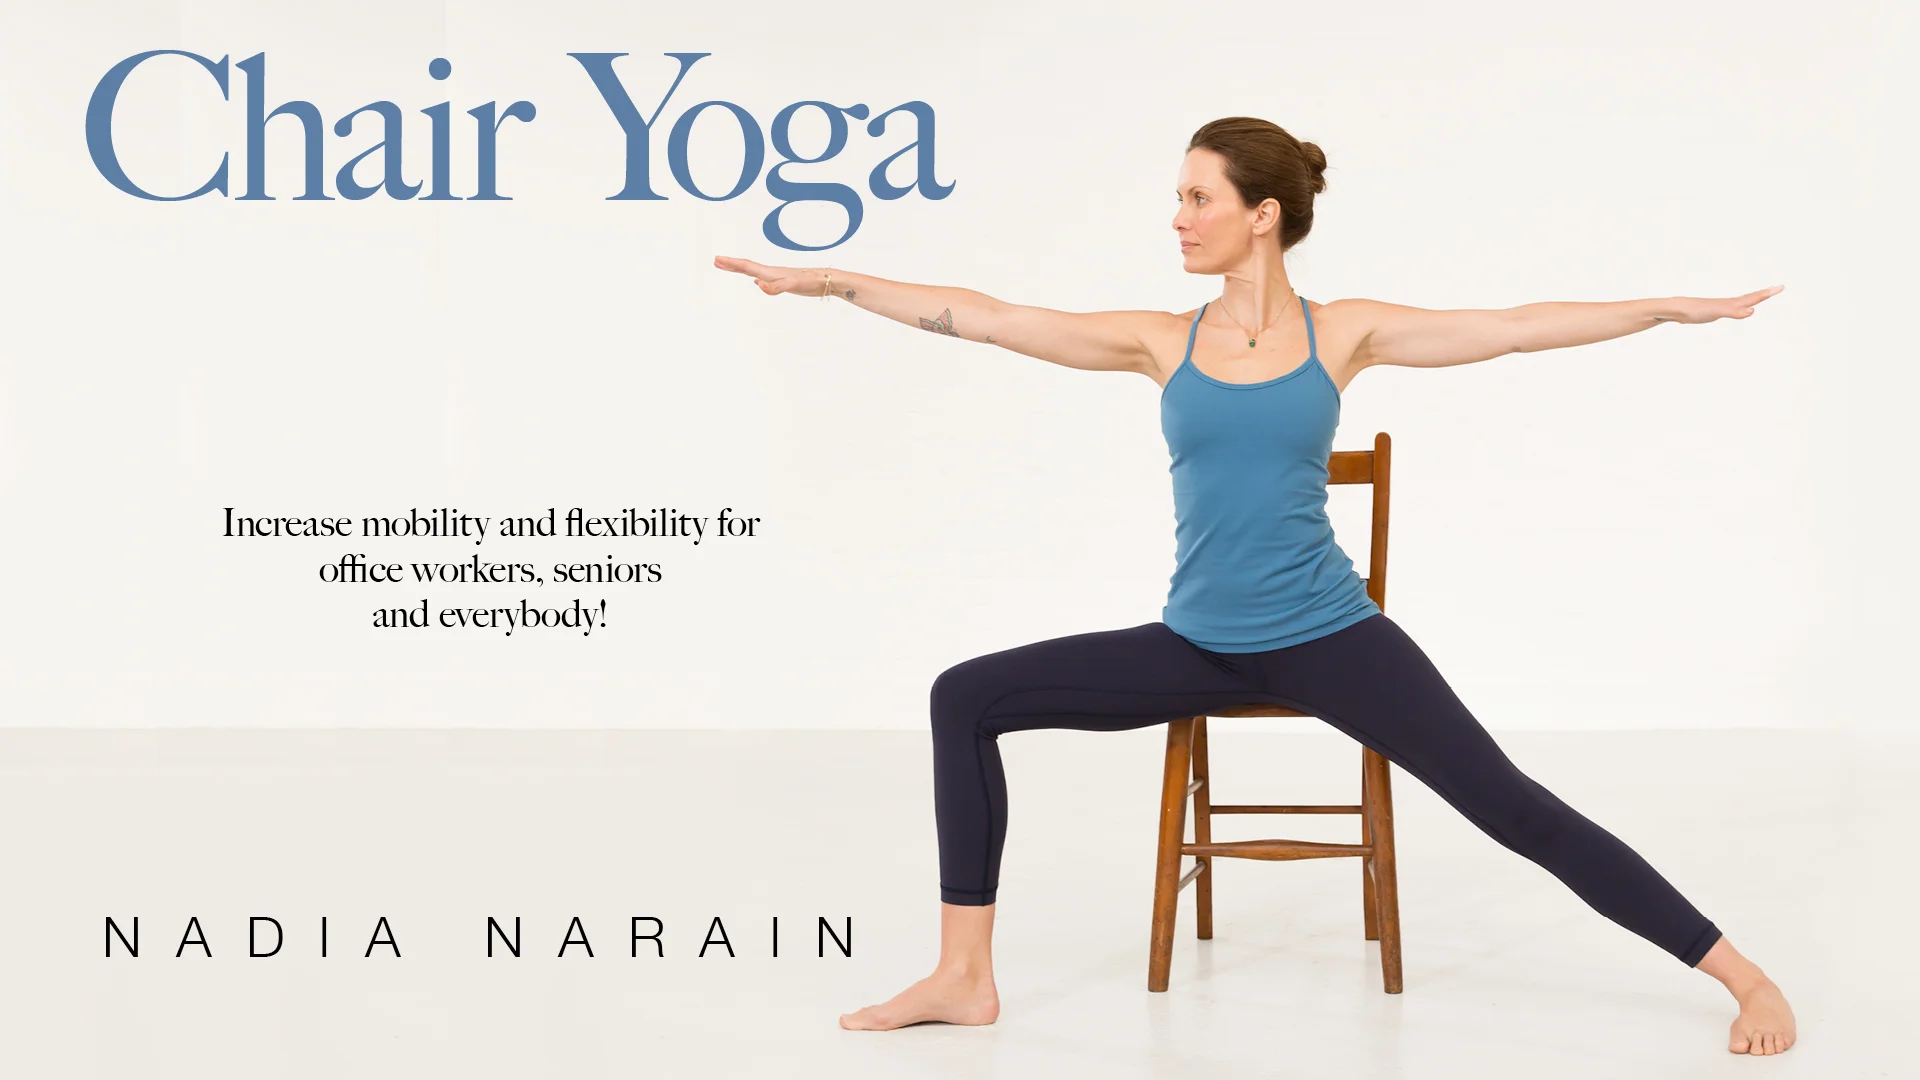 Chair Yoga with Nadia Narain on Vimeo